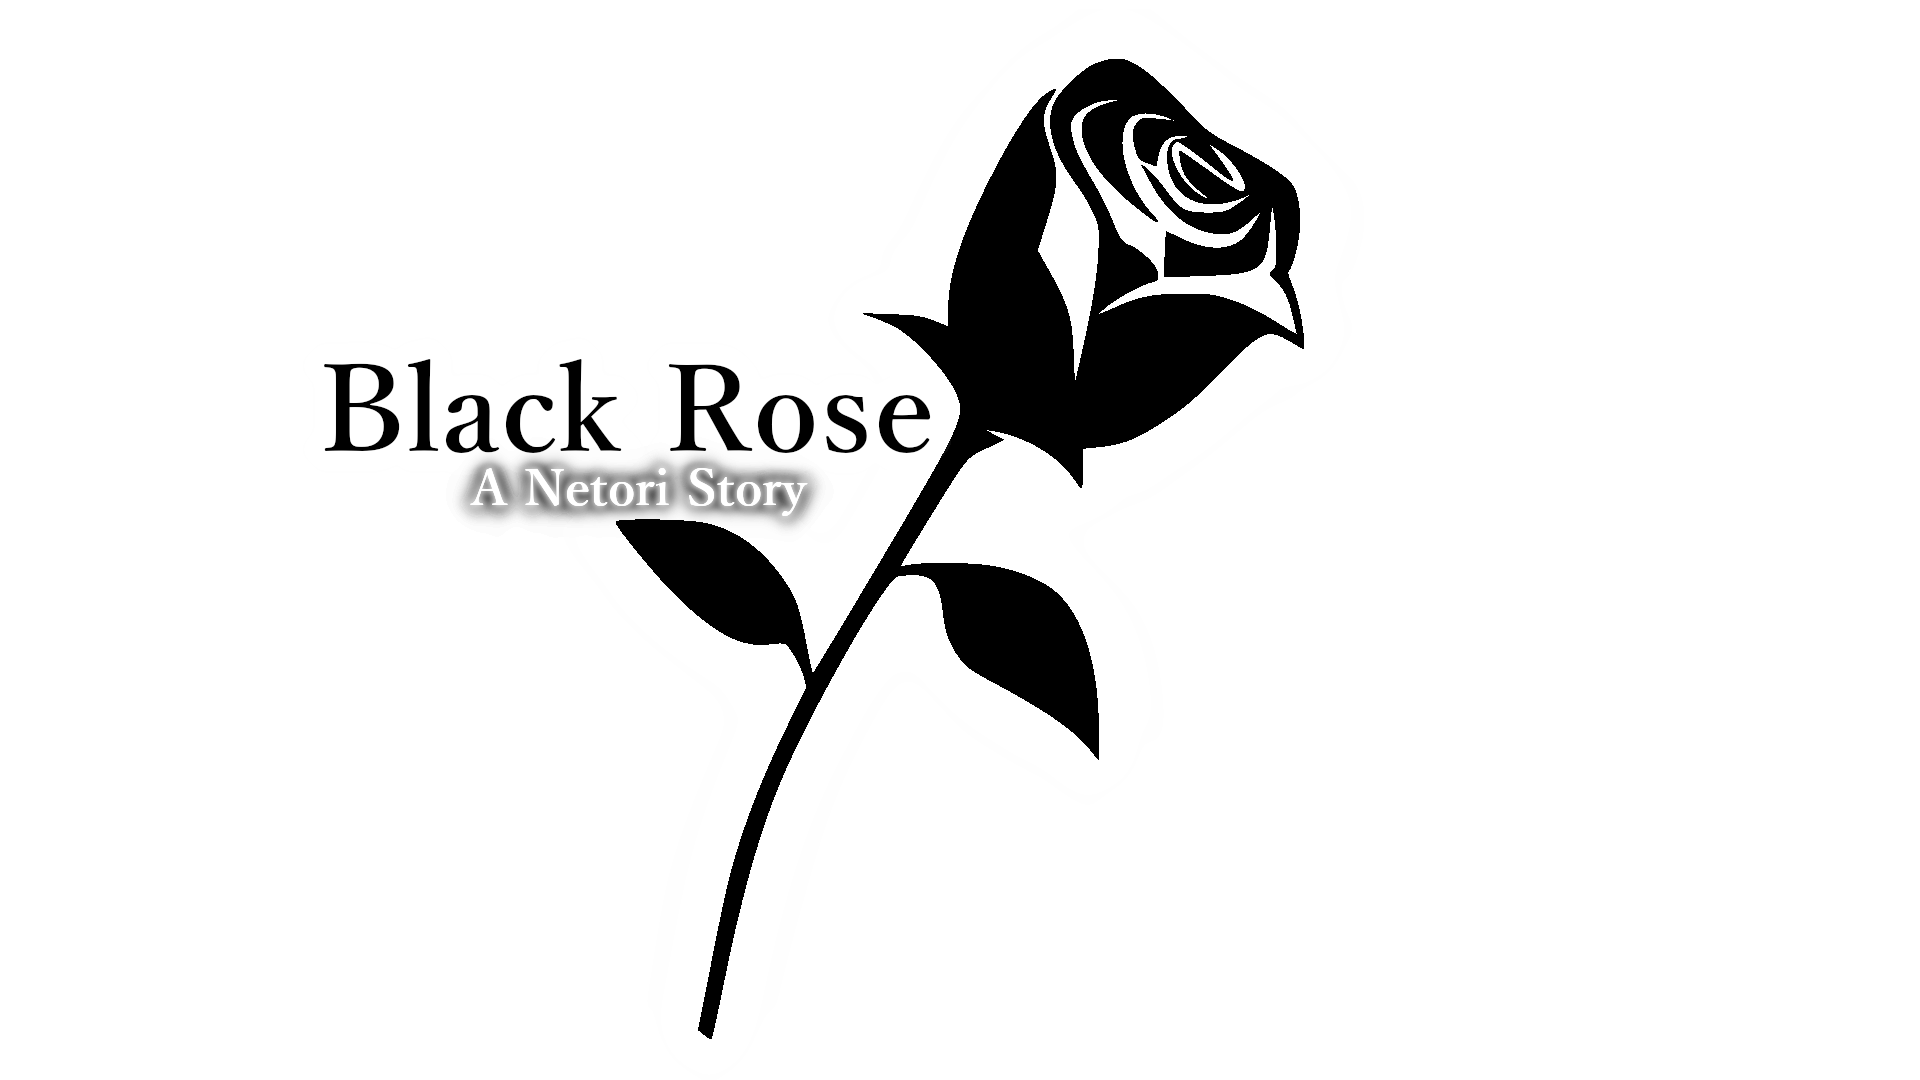 Black Rose -A Netori Story-